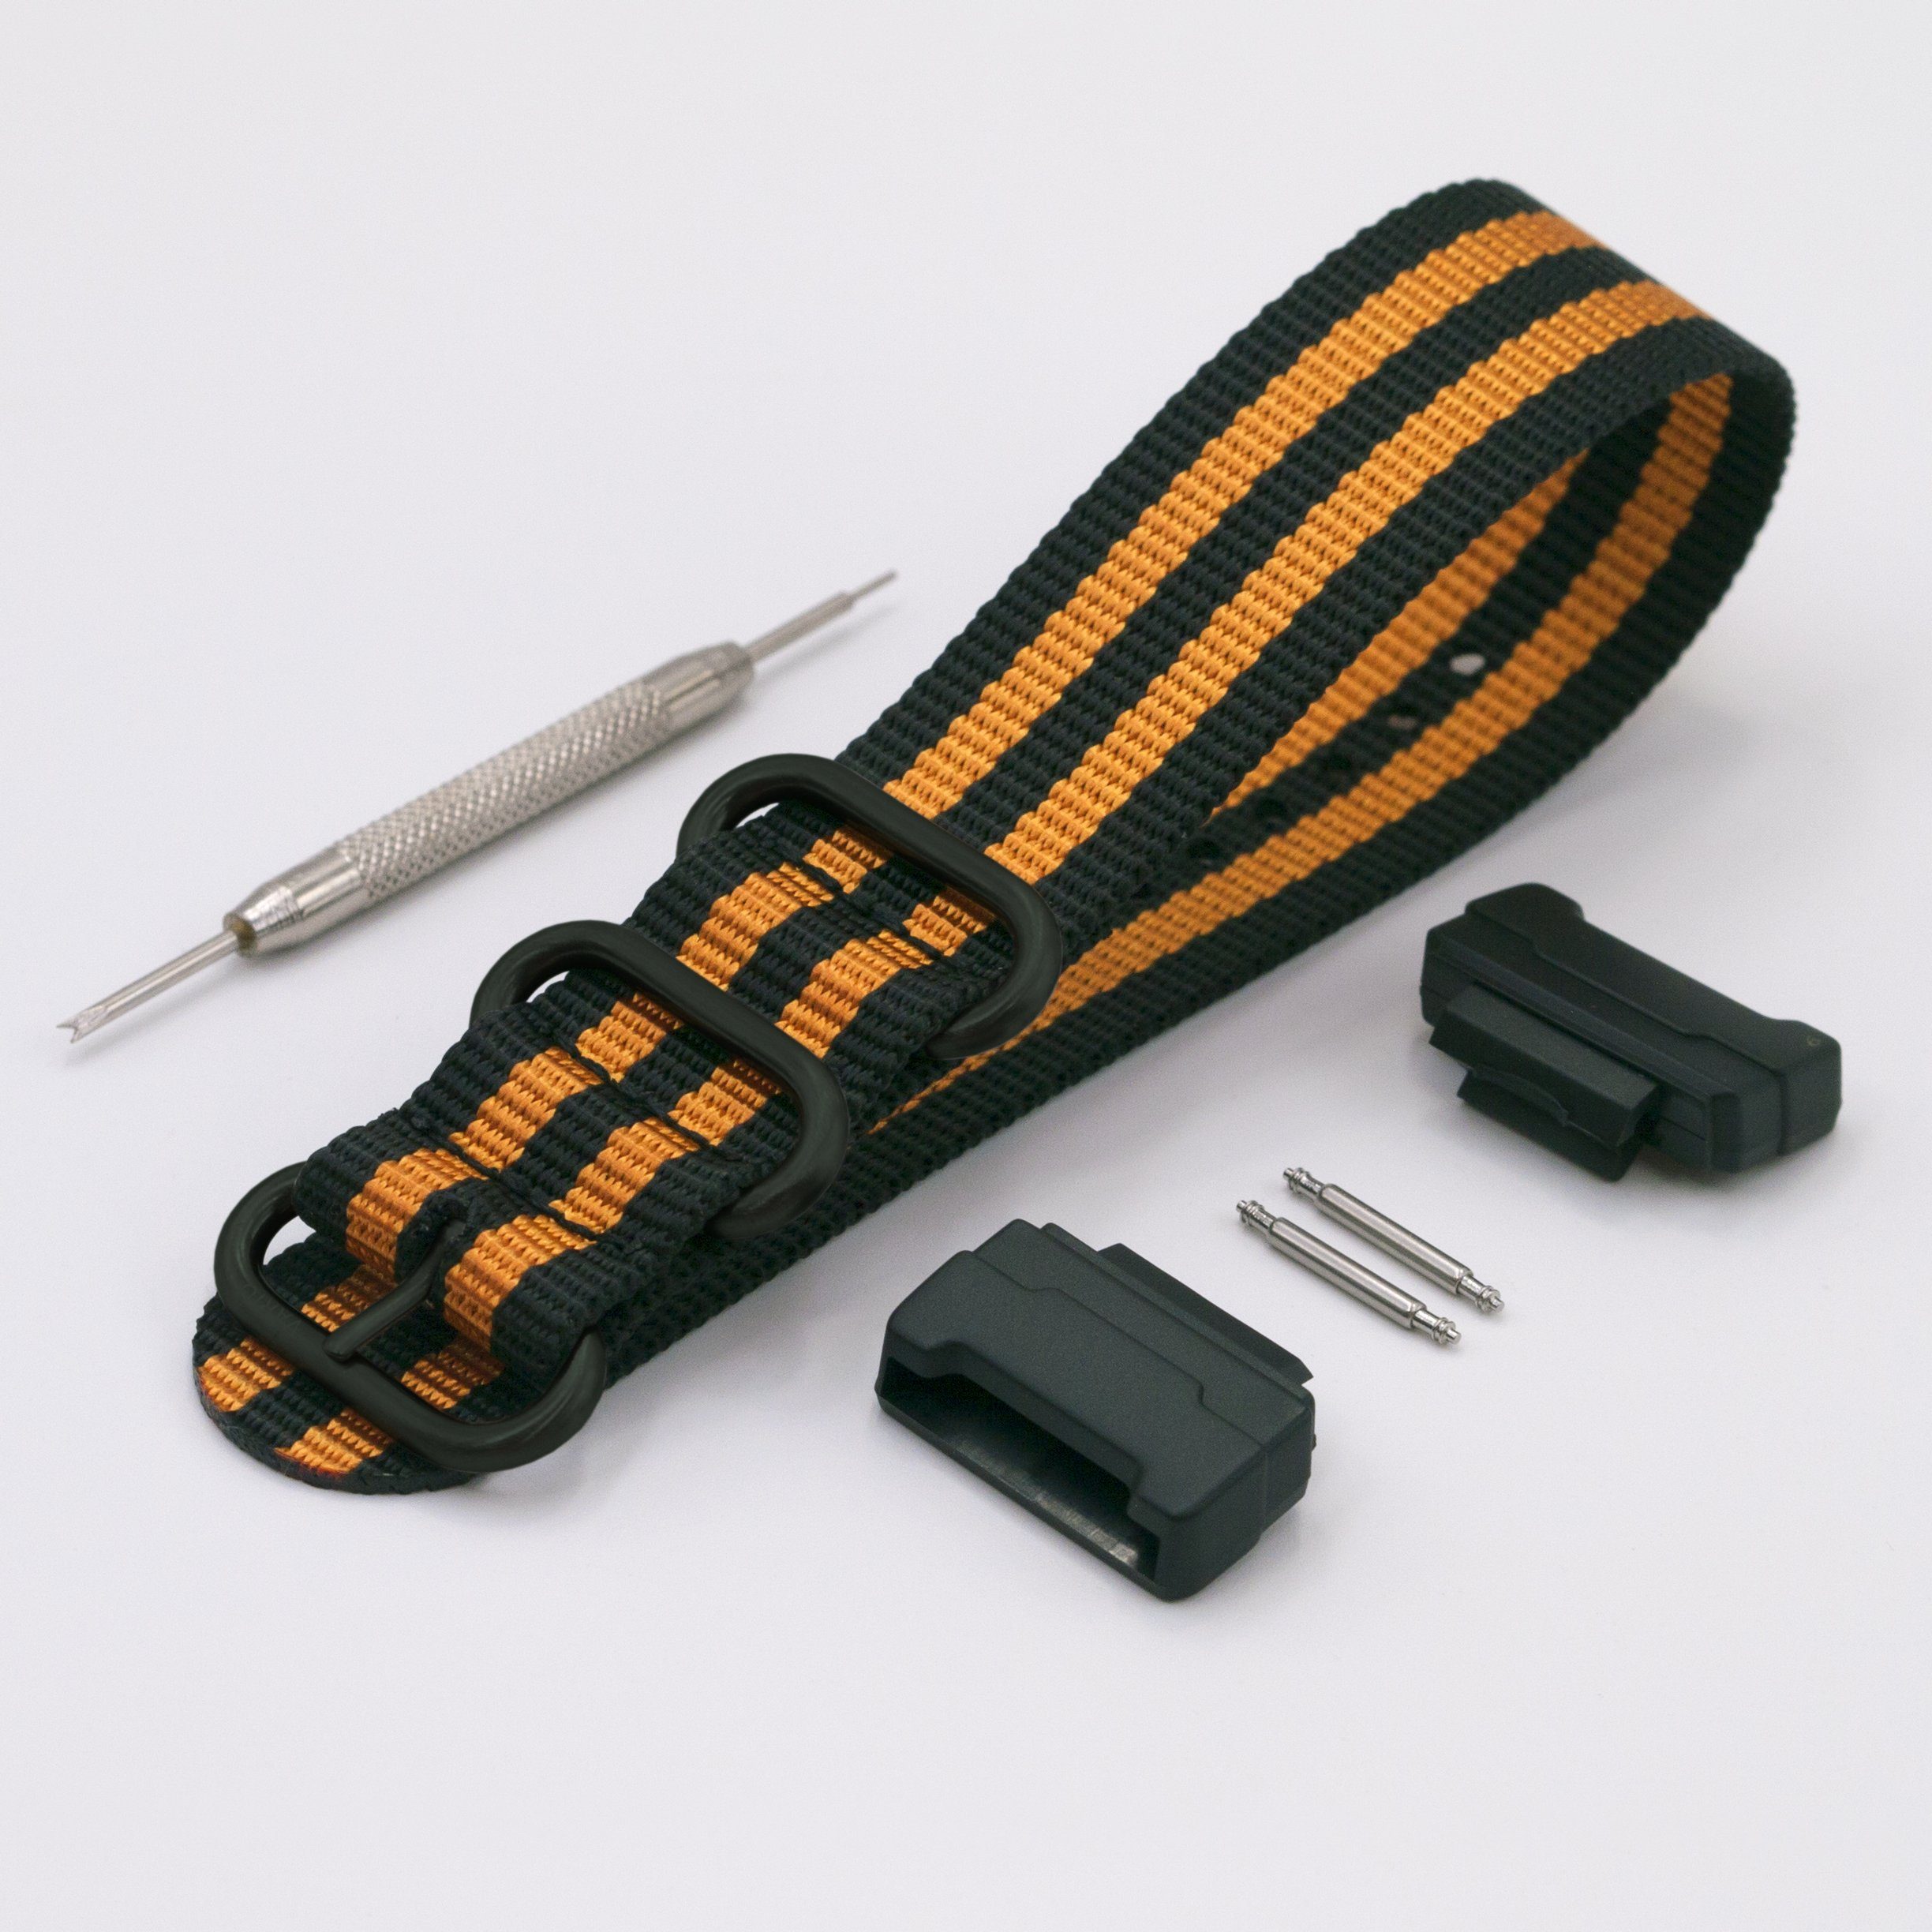 vario ballistic nylon orange black stripe maratac strap with casio g shock adapter